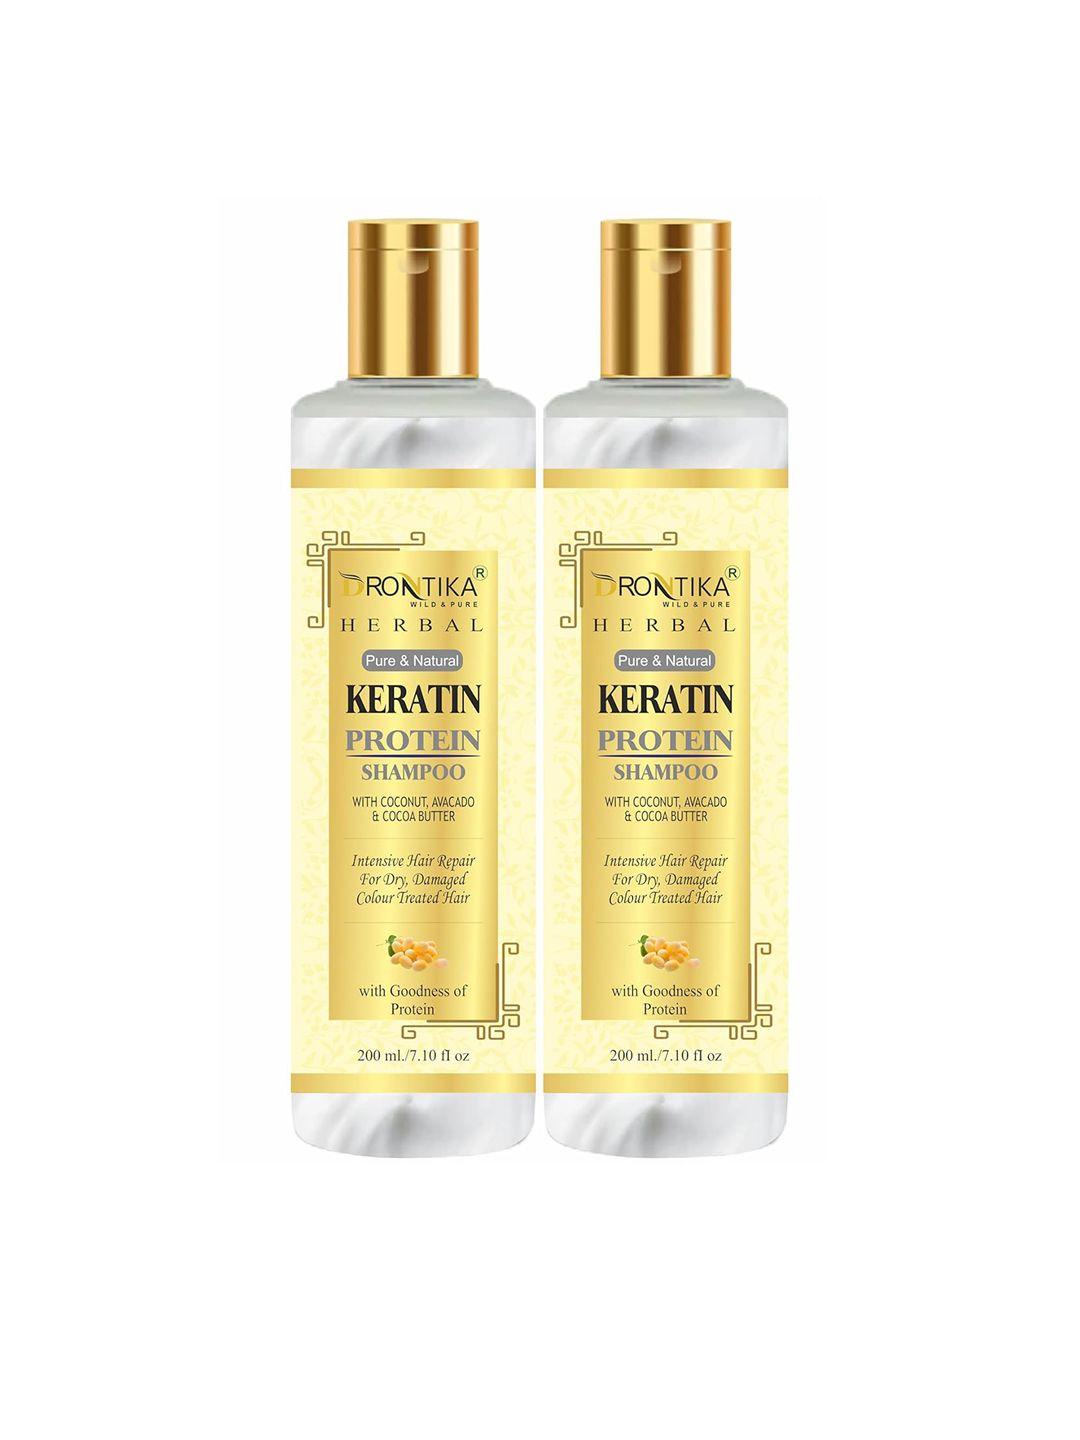 drontika herbal set of 2 pure & natural keratin protein shampoo - 200ml each